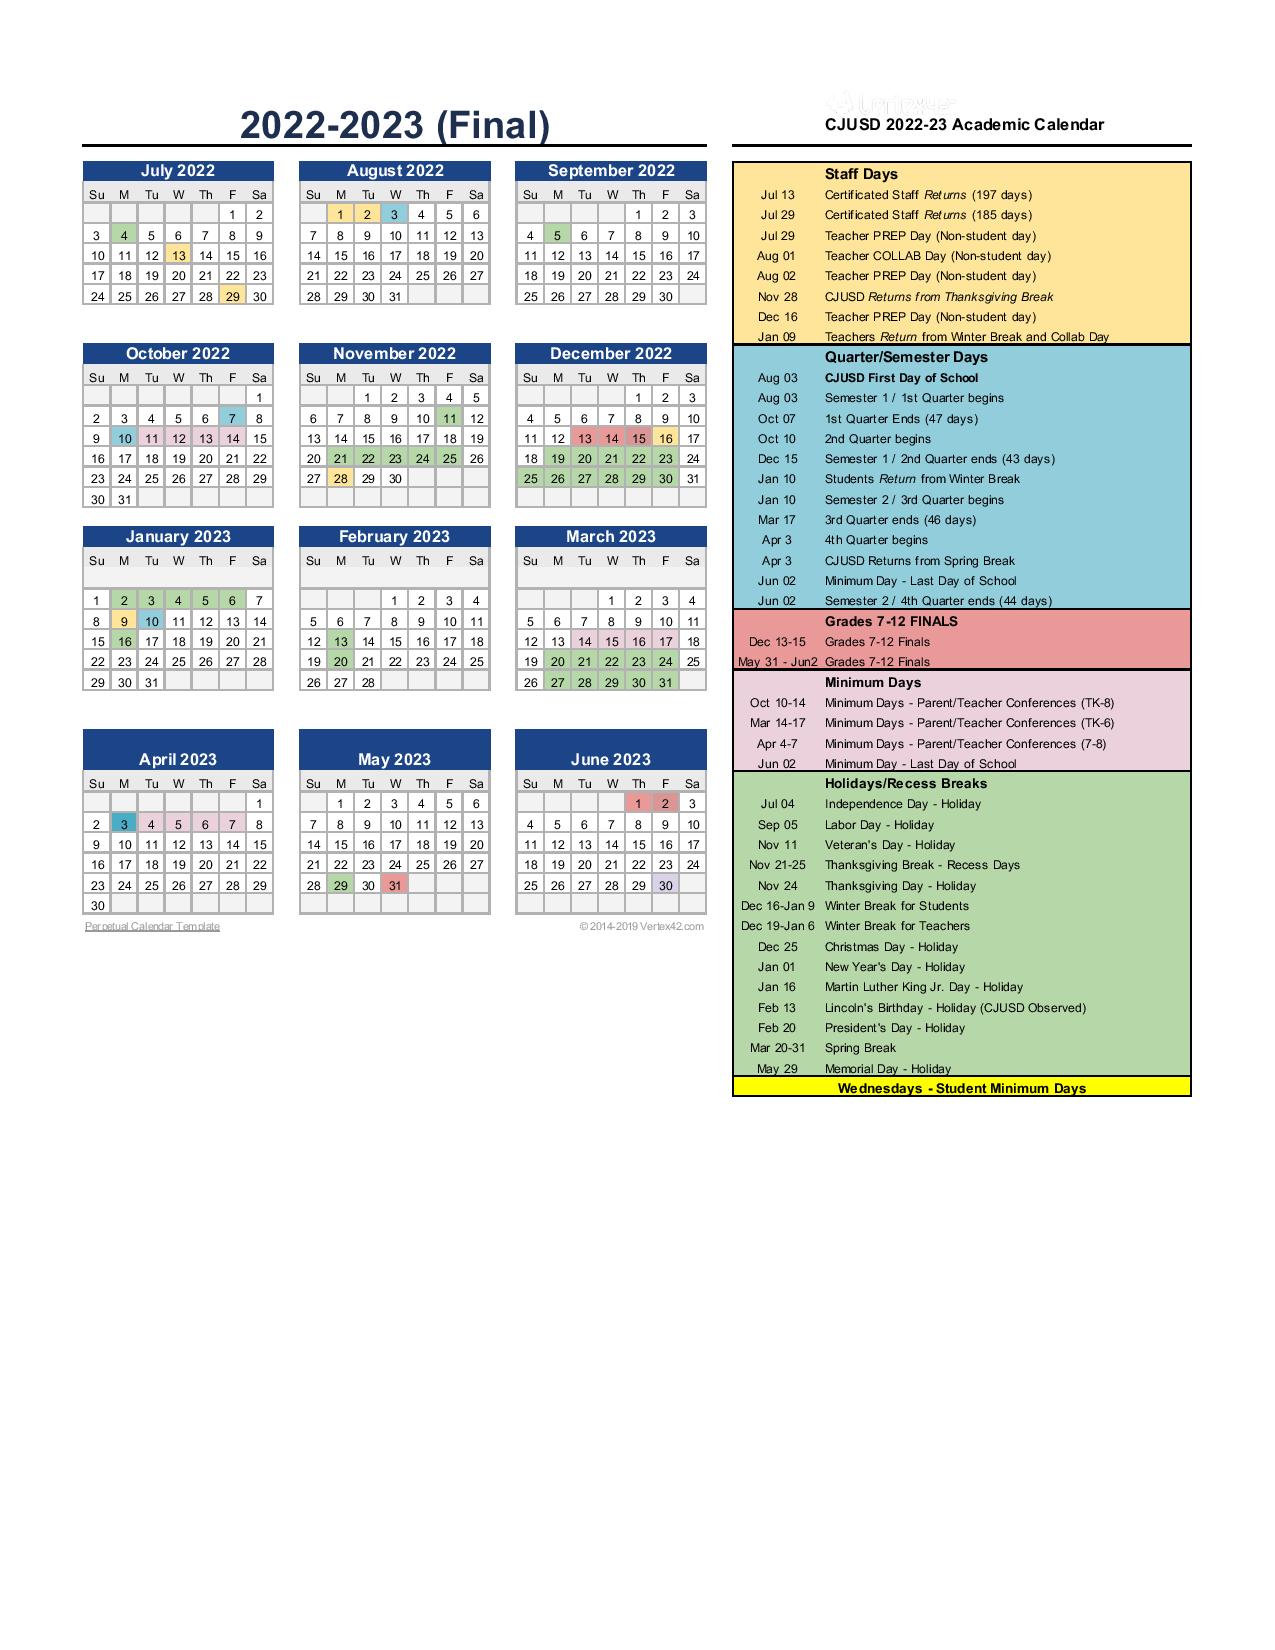 Capistrano Unified School District Calendar 2024 2024 dacey krystalle